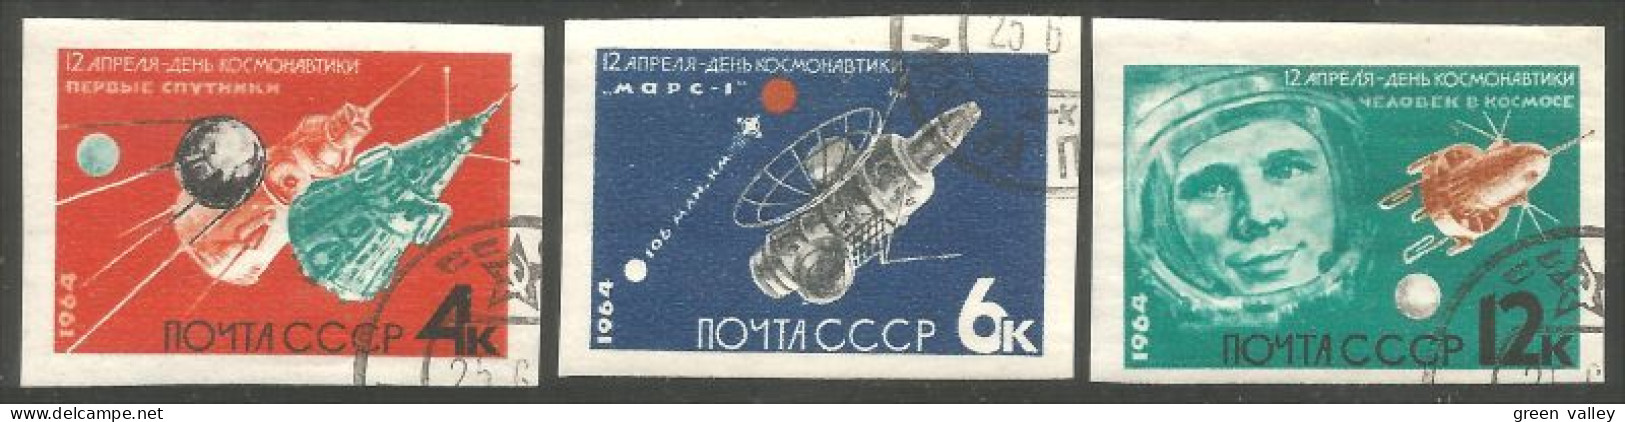 773 Russie Espace Space Satellites Gagarine Spoutnik Sputnik Imperforate (RUK-673) - Russia & USSR